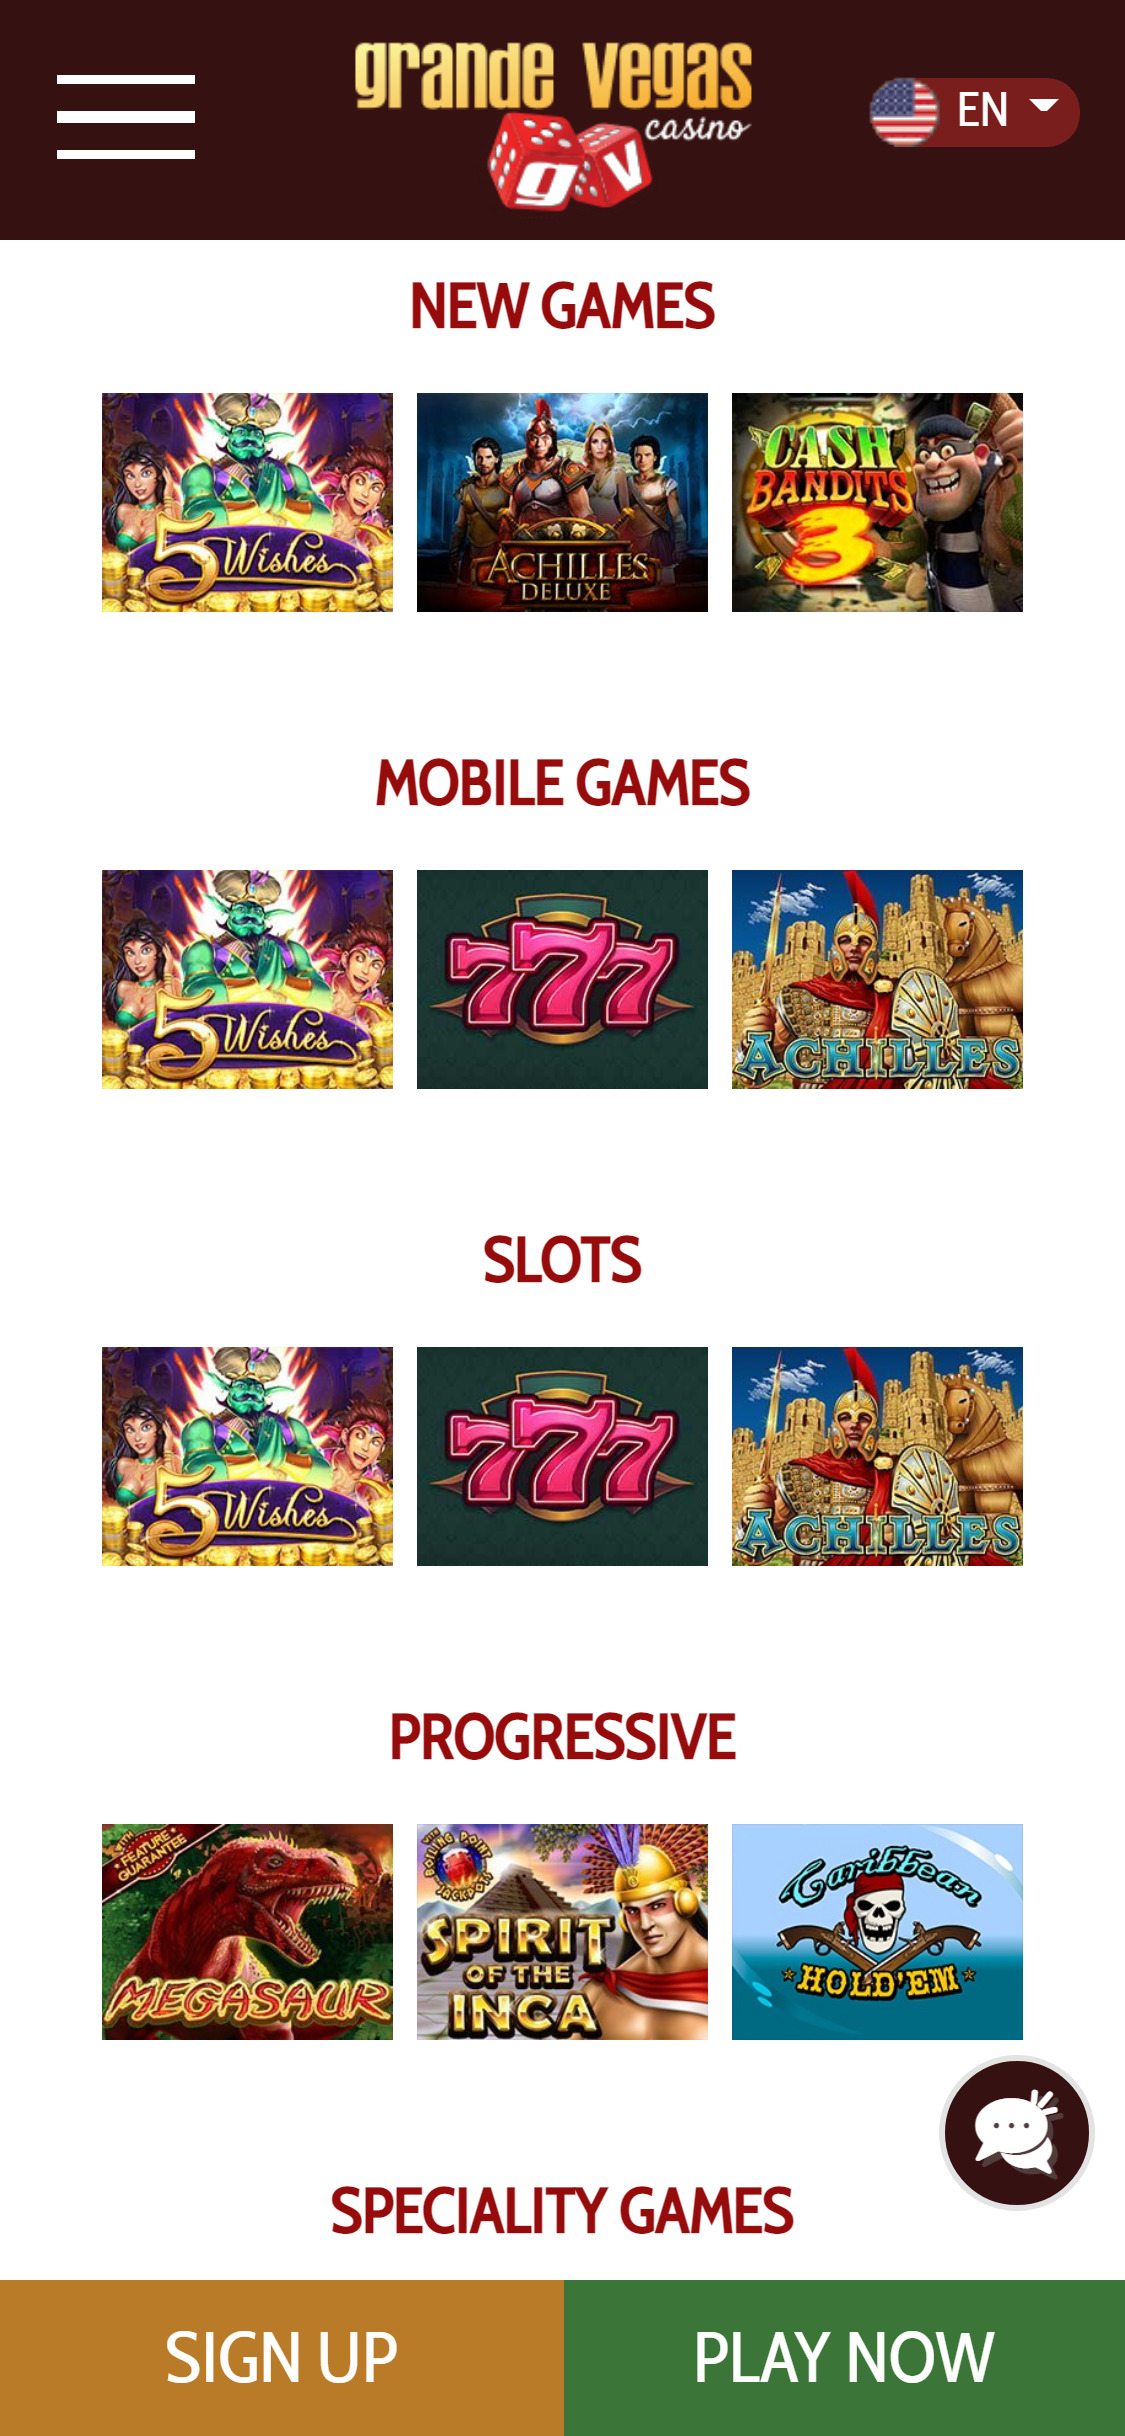 Grande Vegas Casino Mobile Games Review